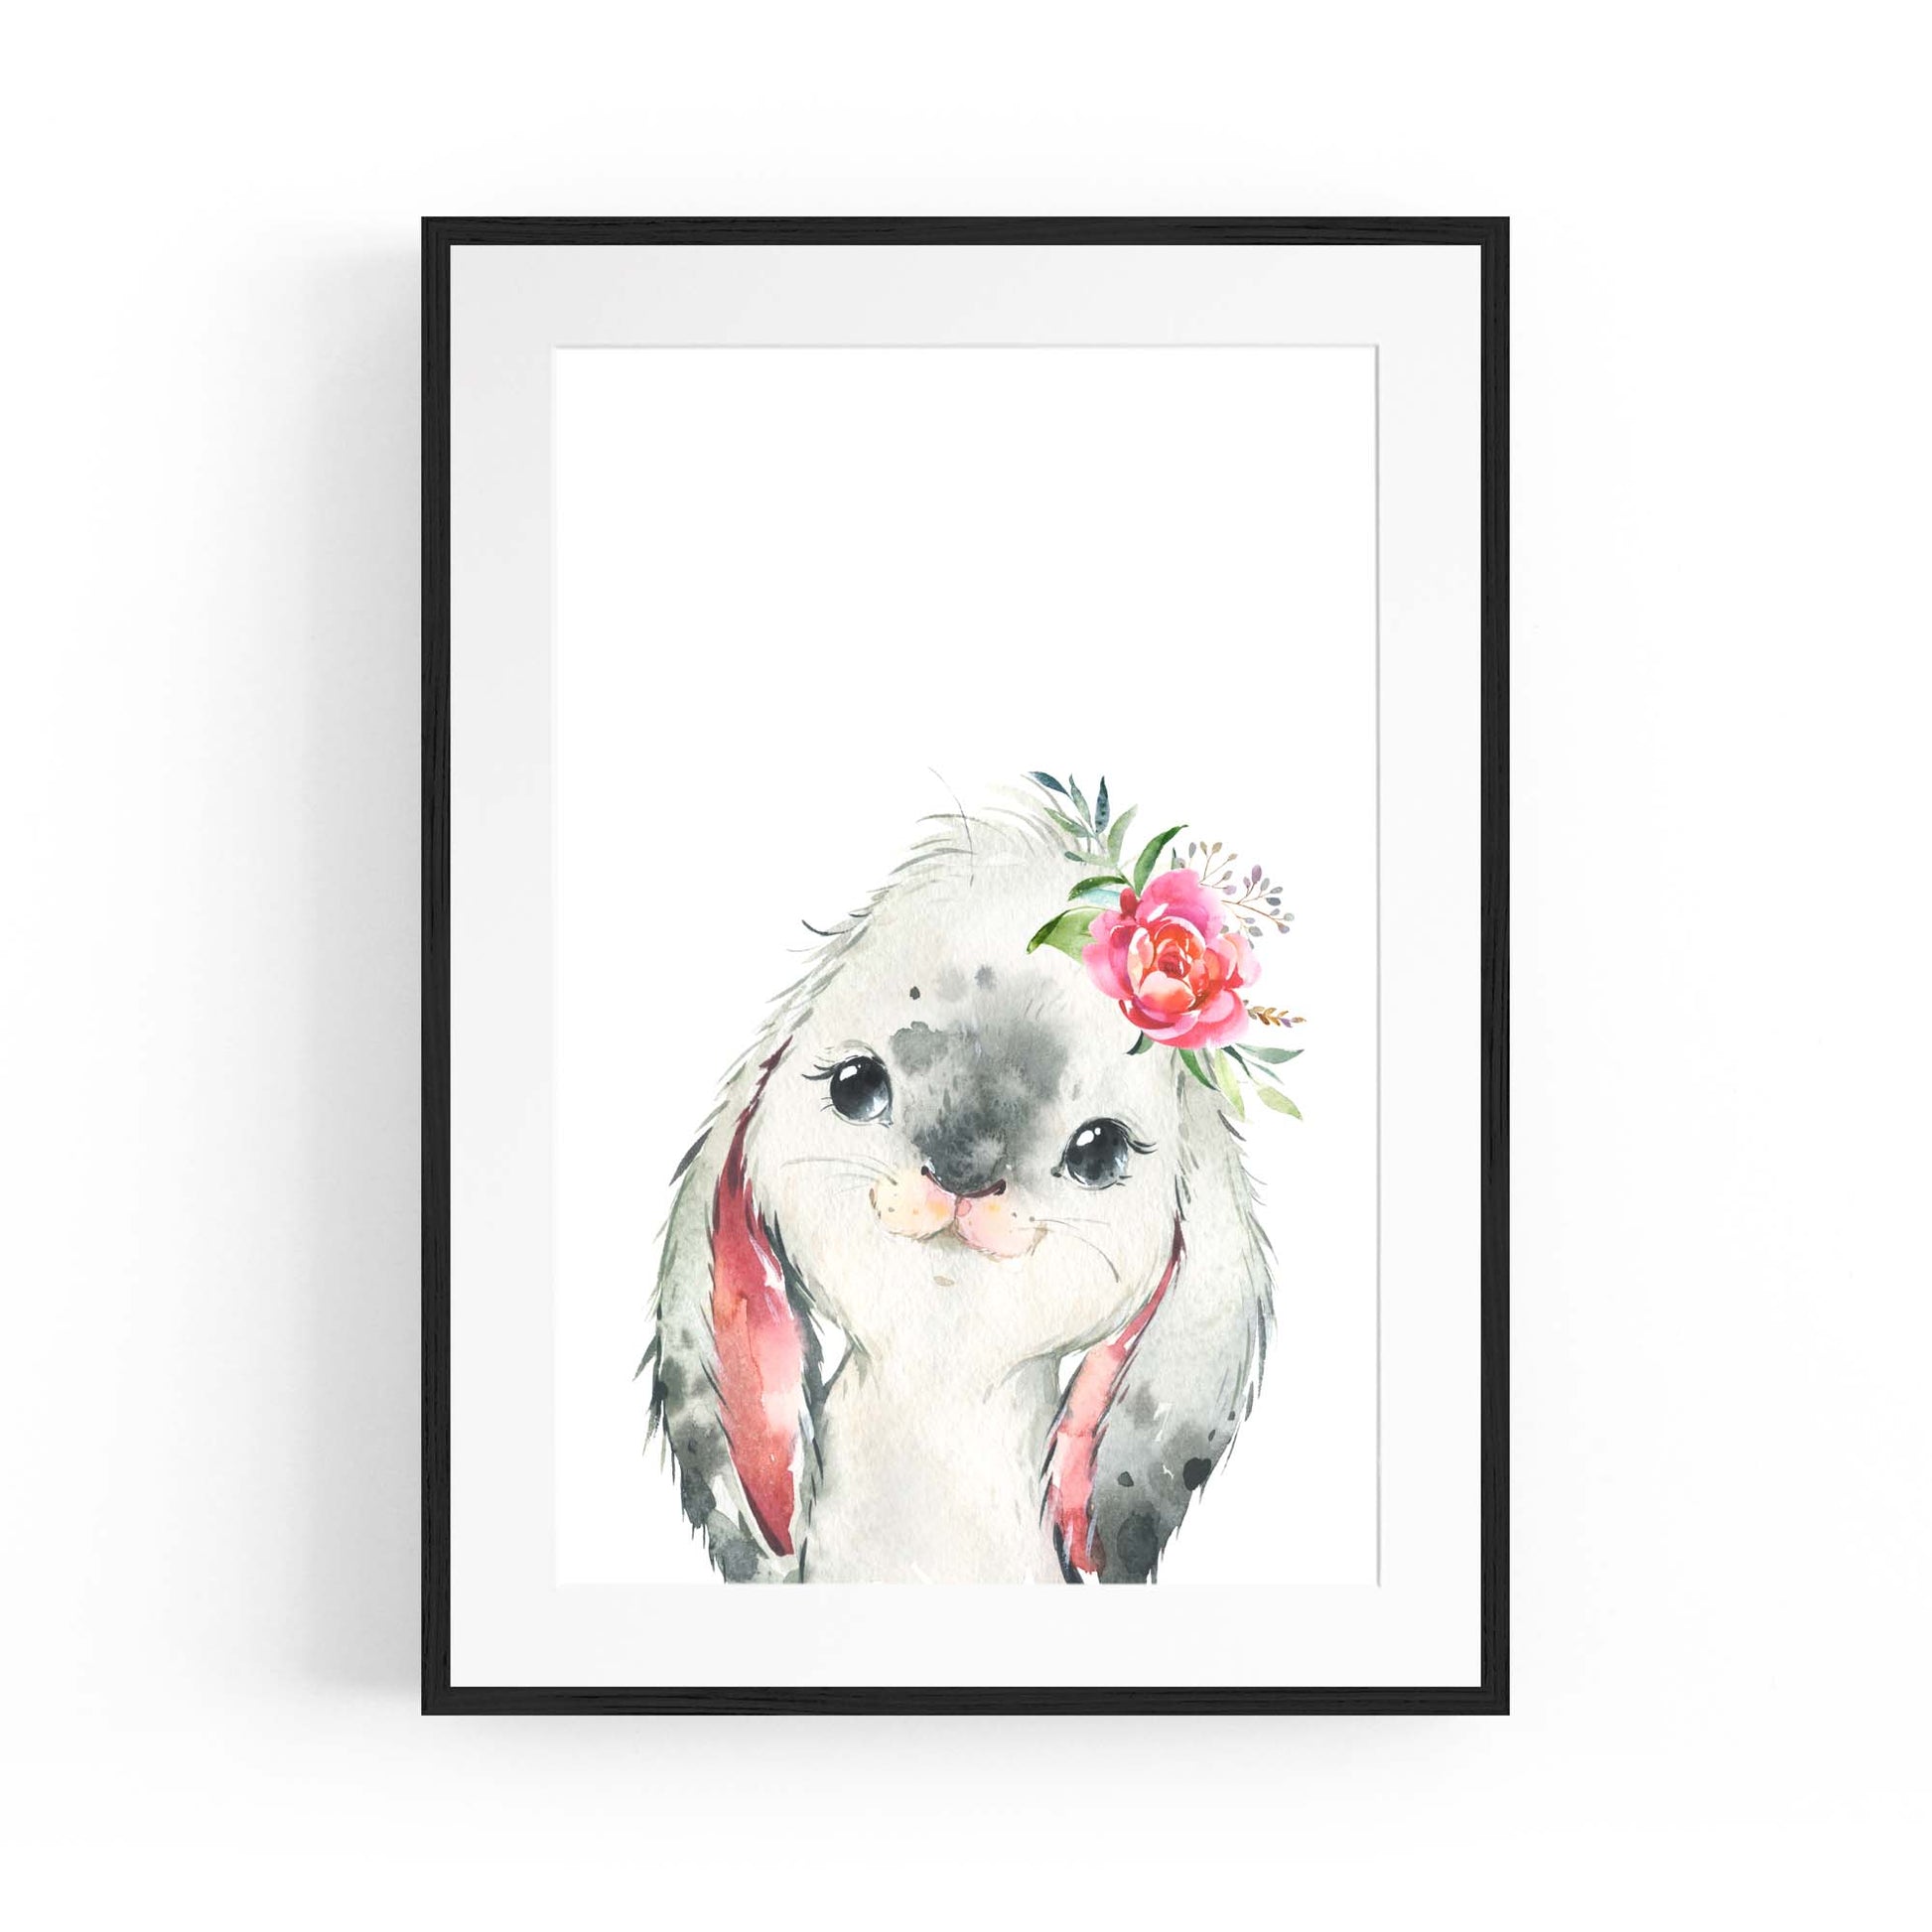 Cute Baby Bunny Rabbit Nursery Animal Wall Art - The Affordable Art Company